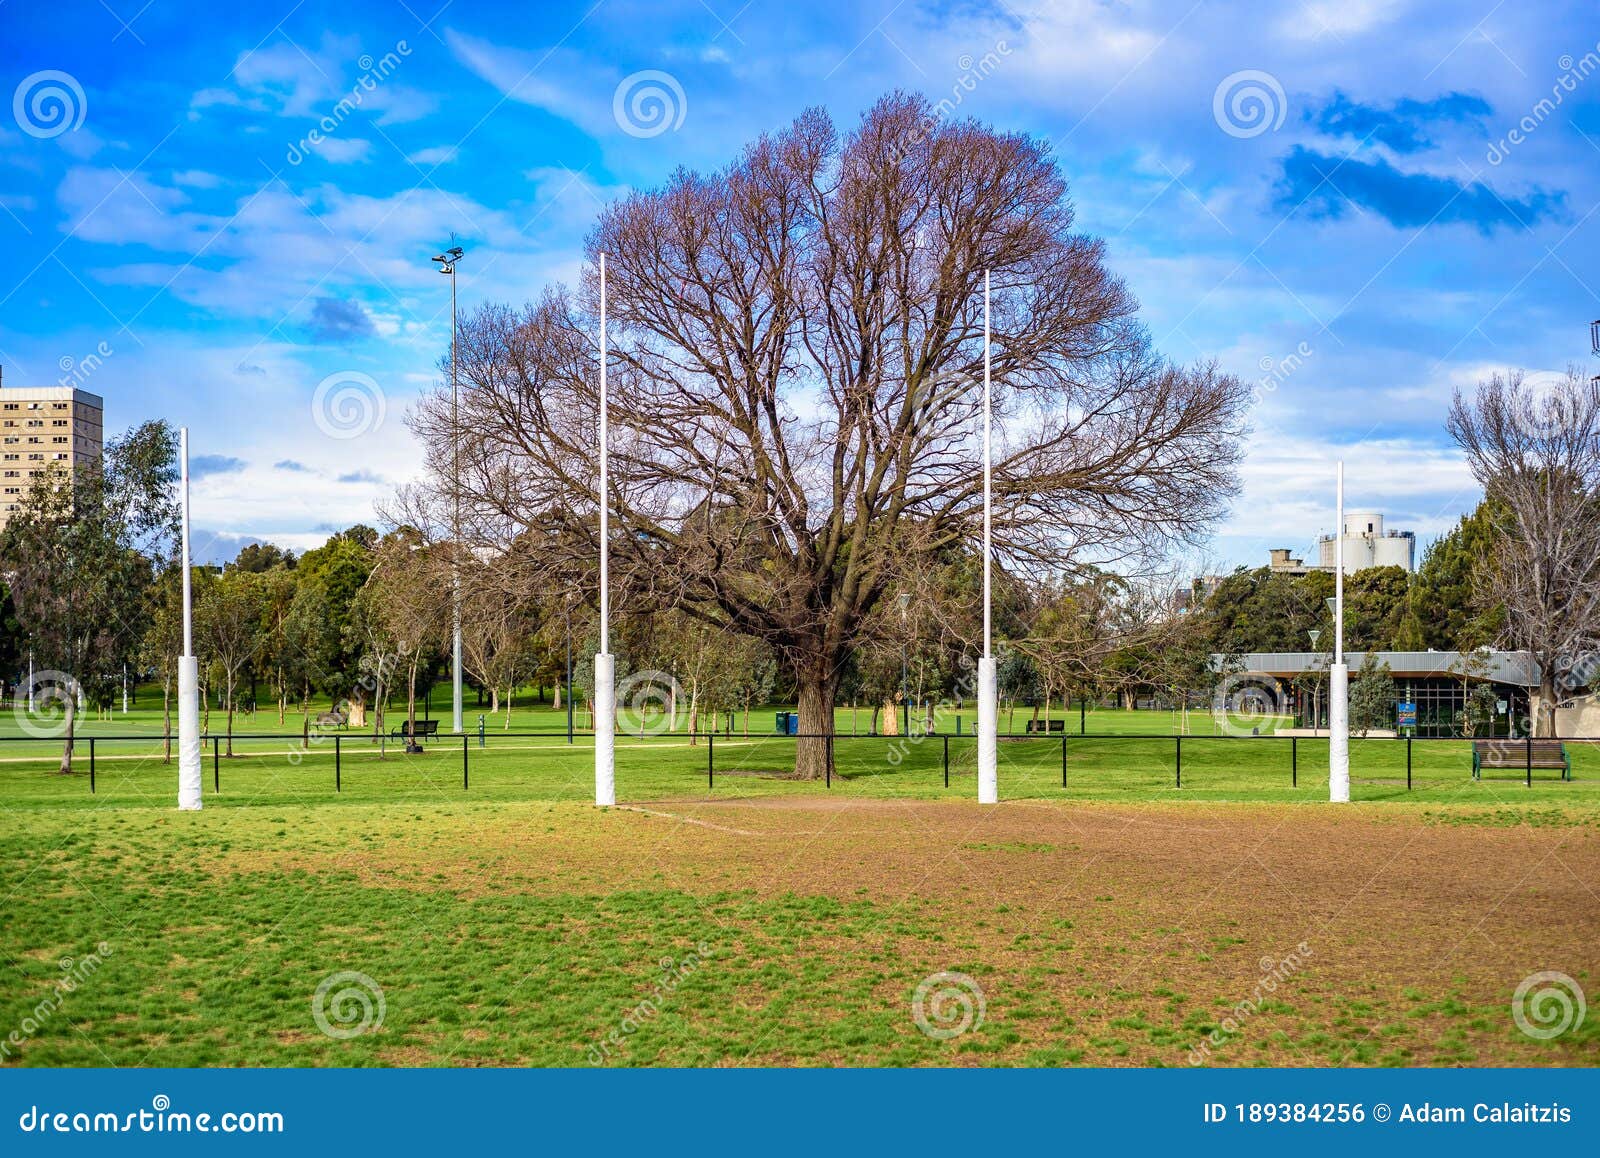 Australian Football League Goal Posts Photo - Image of empty, grass: 189384256